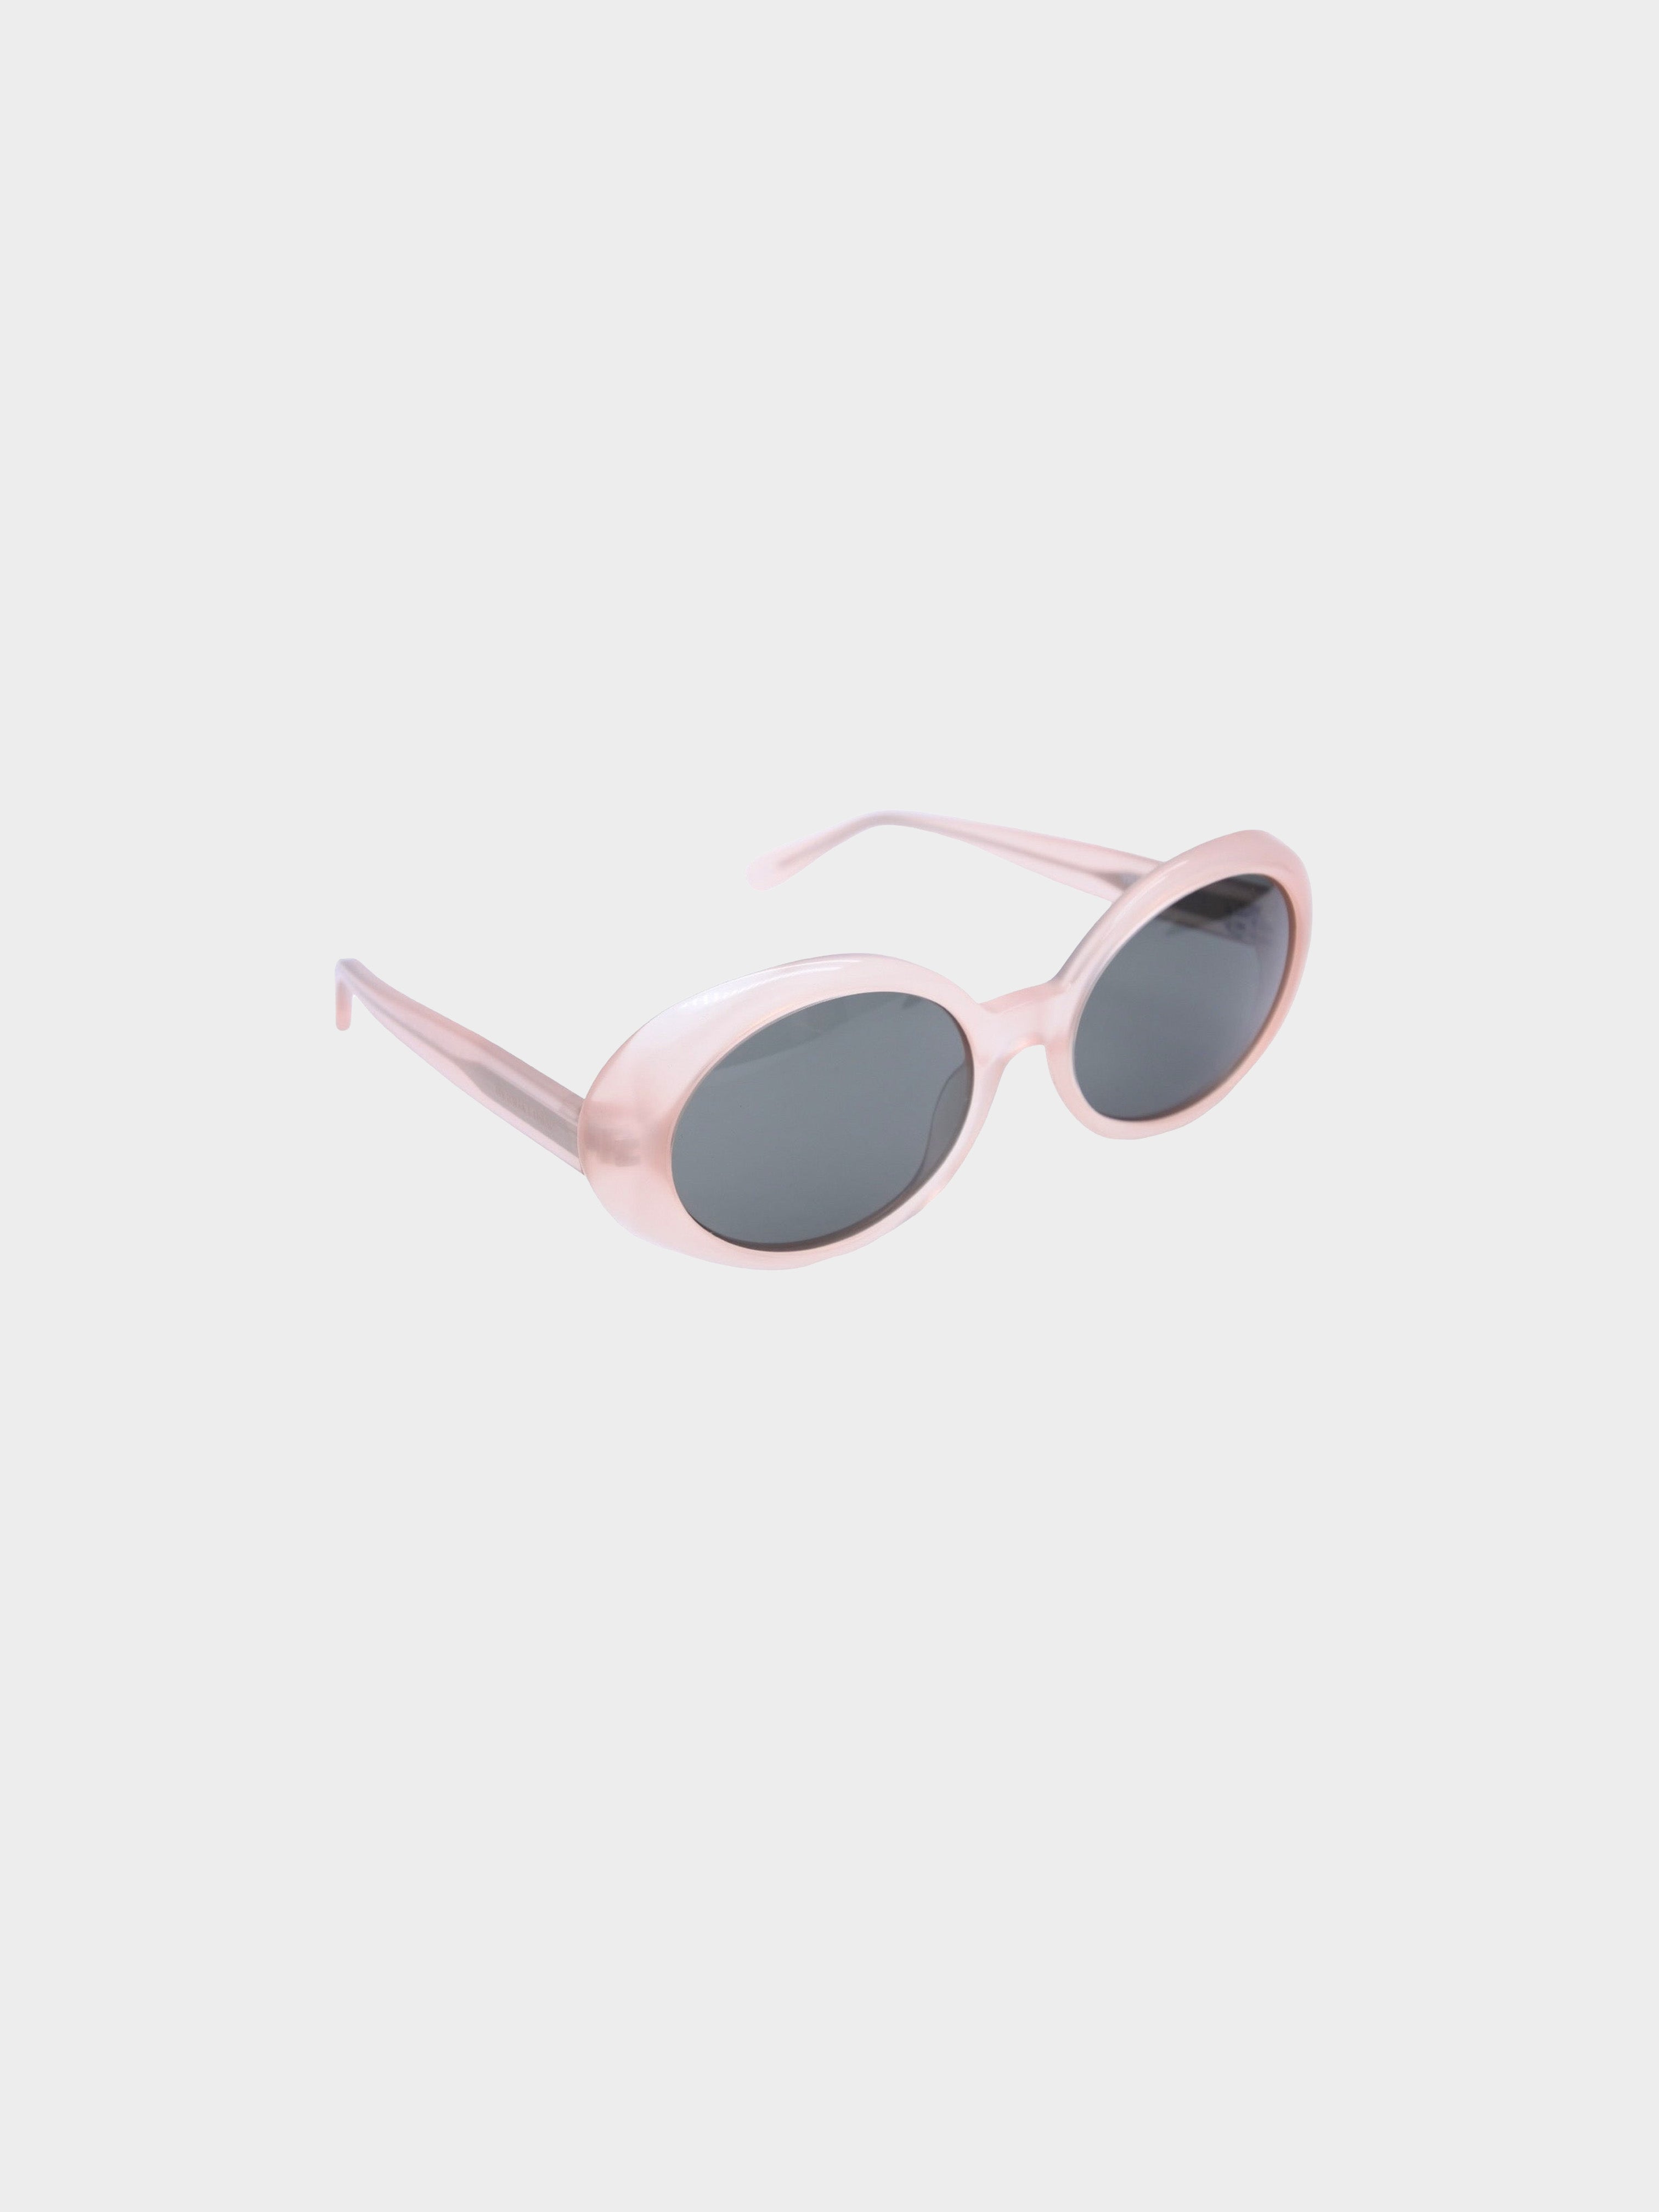 Saint Laurent SS16 Menswear Pink Kurt Cobain Sunglasses